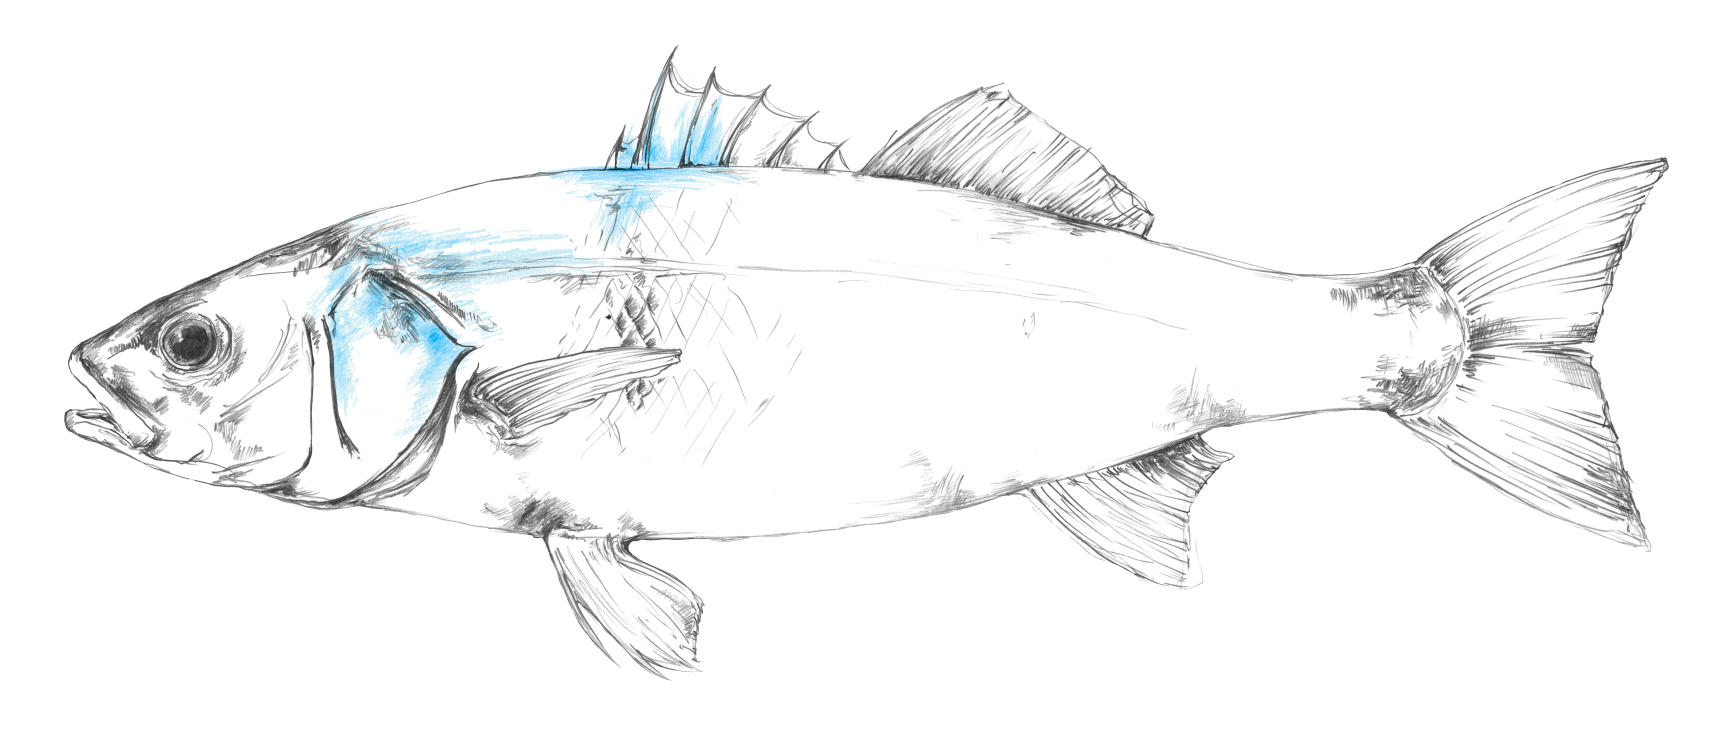 myProtec sea bass illustration